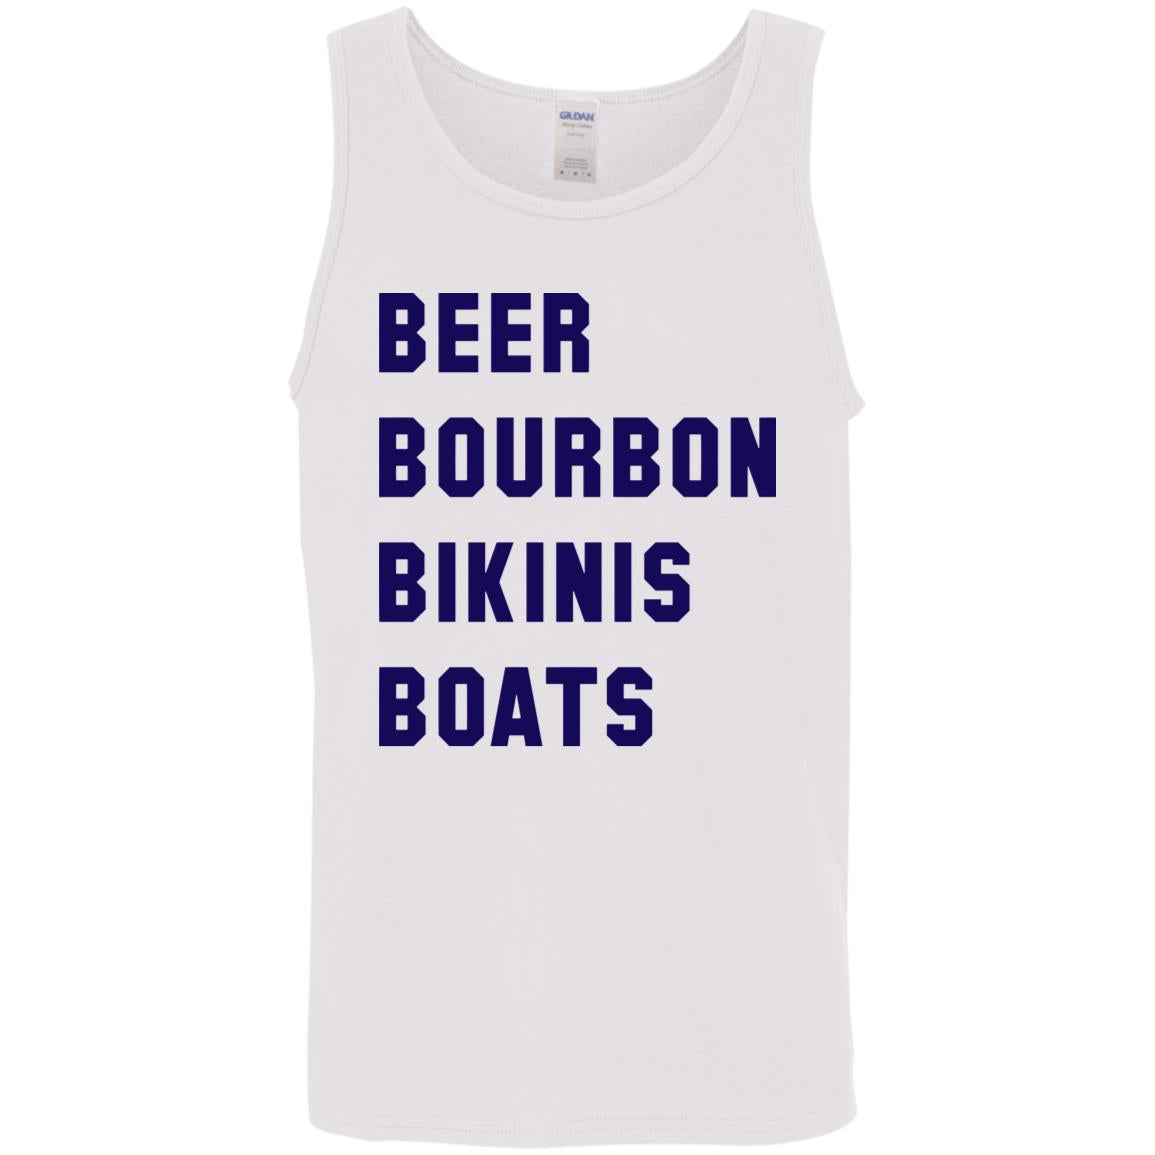 ***2 SIDED***  HRCL FL - Navy Beer Bourbon Bikinis Boats - 2 Sided G520 Cotton Tank Top 5.3 oz.